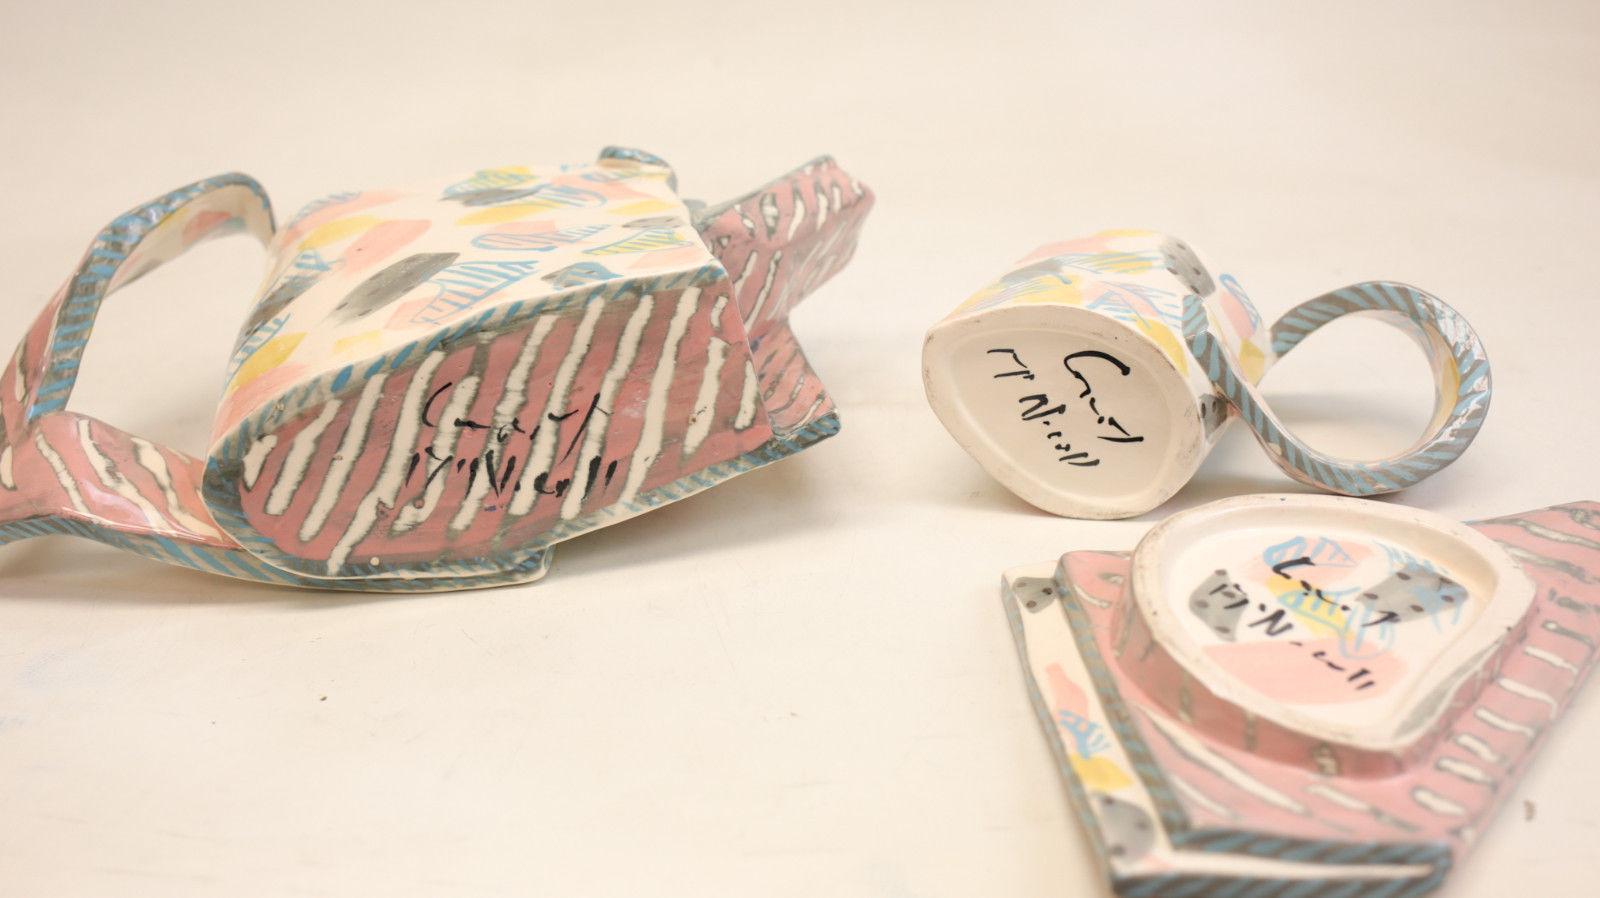 Carol McNicoll Hand Painted Geometric Ceramic Tea Service for 6, Signed 2